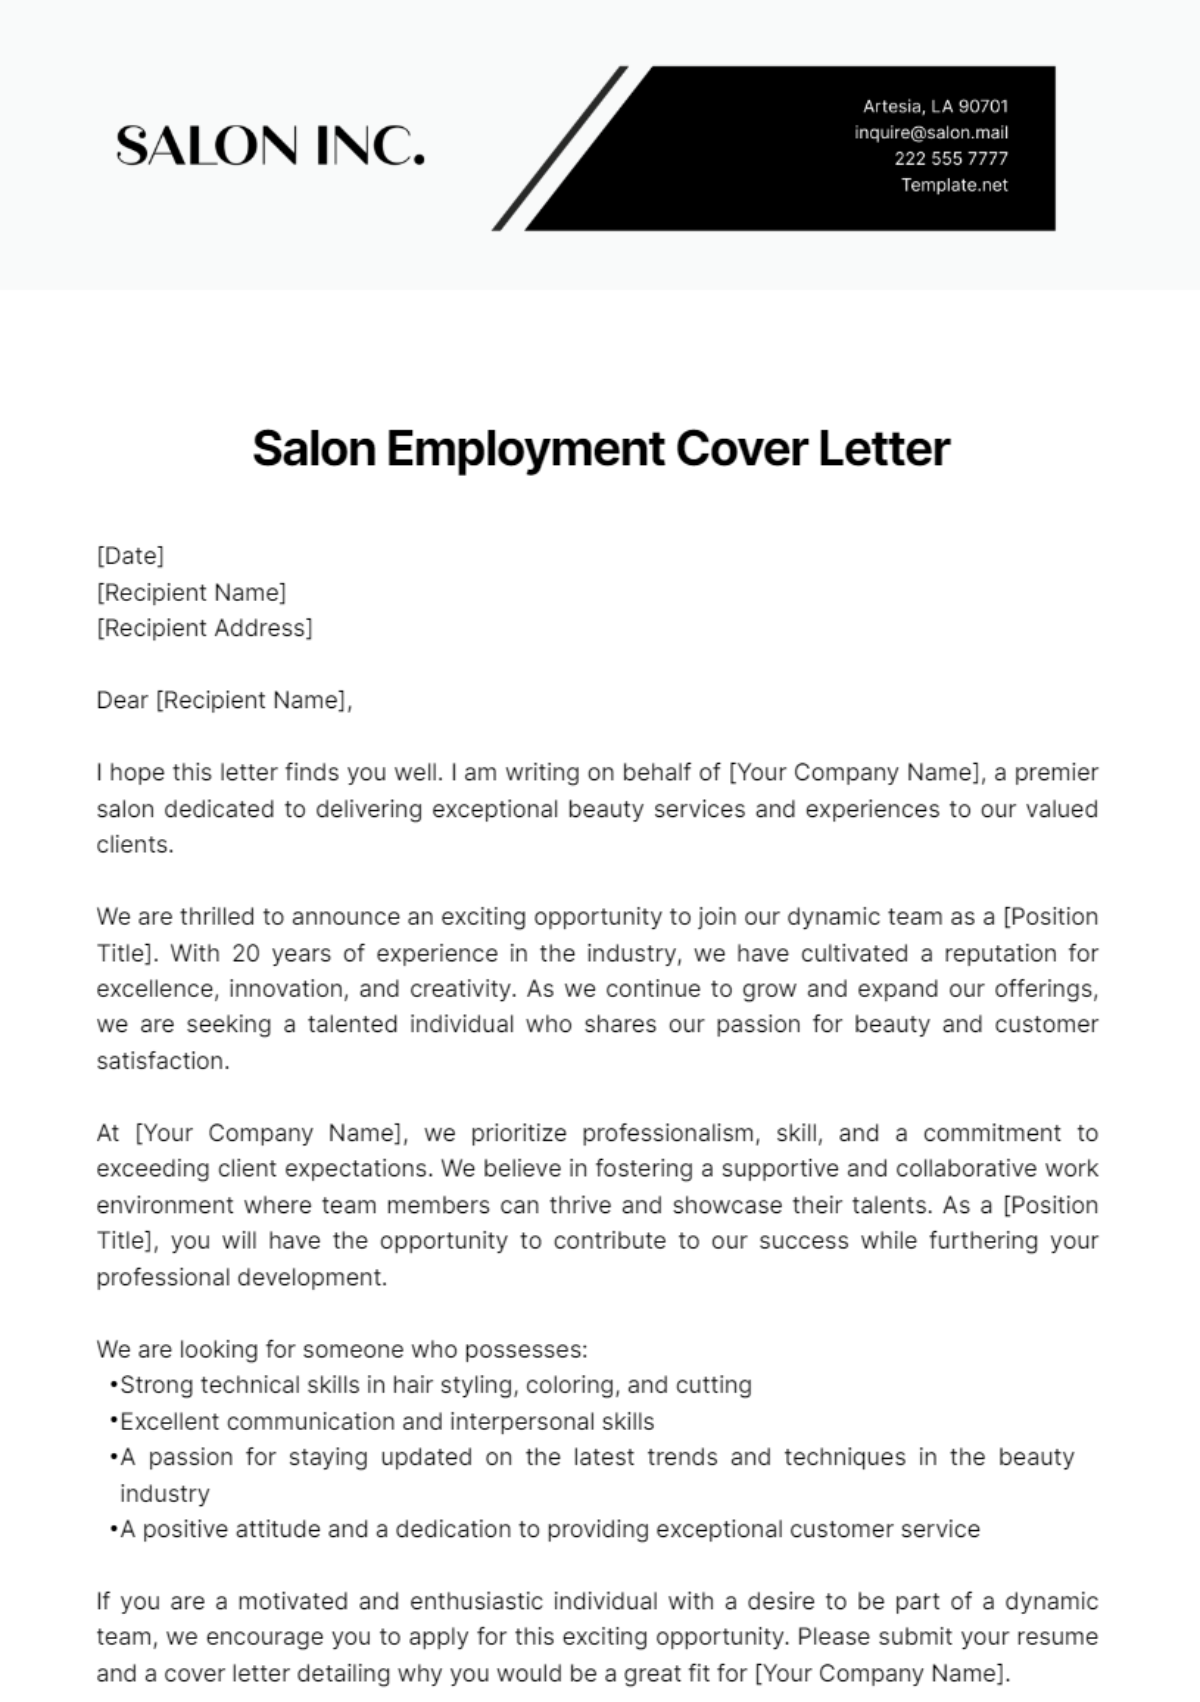 Salon Employment Cover Letter Template